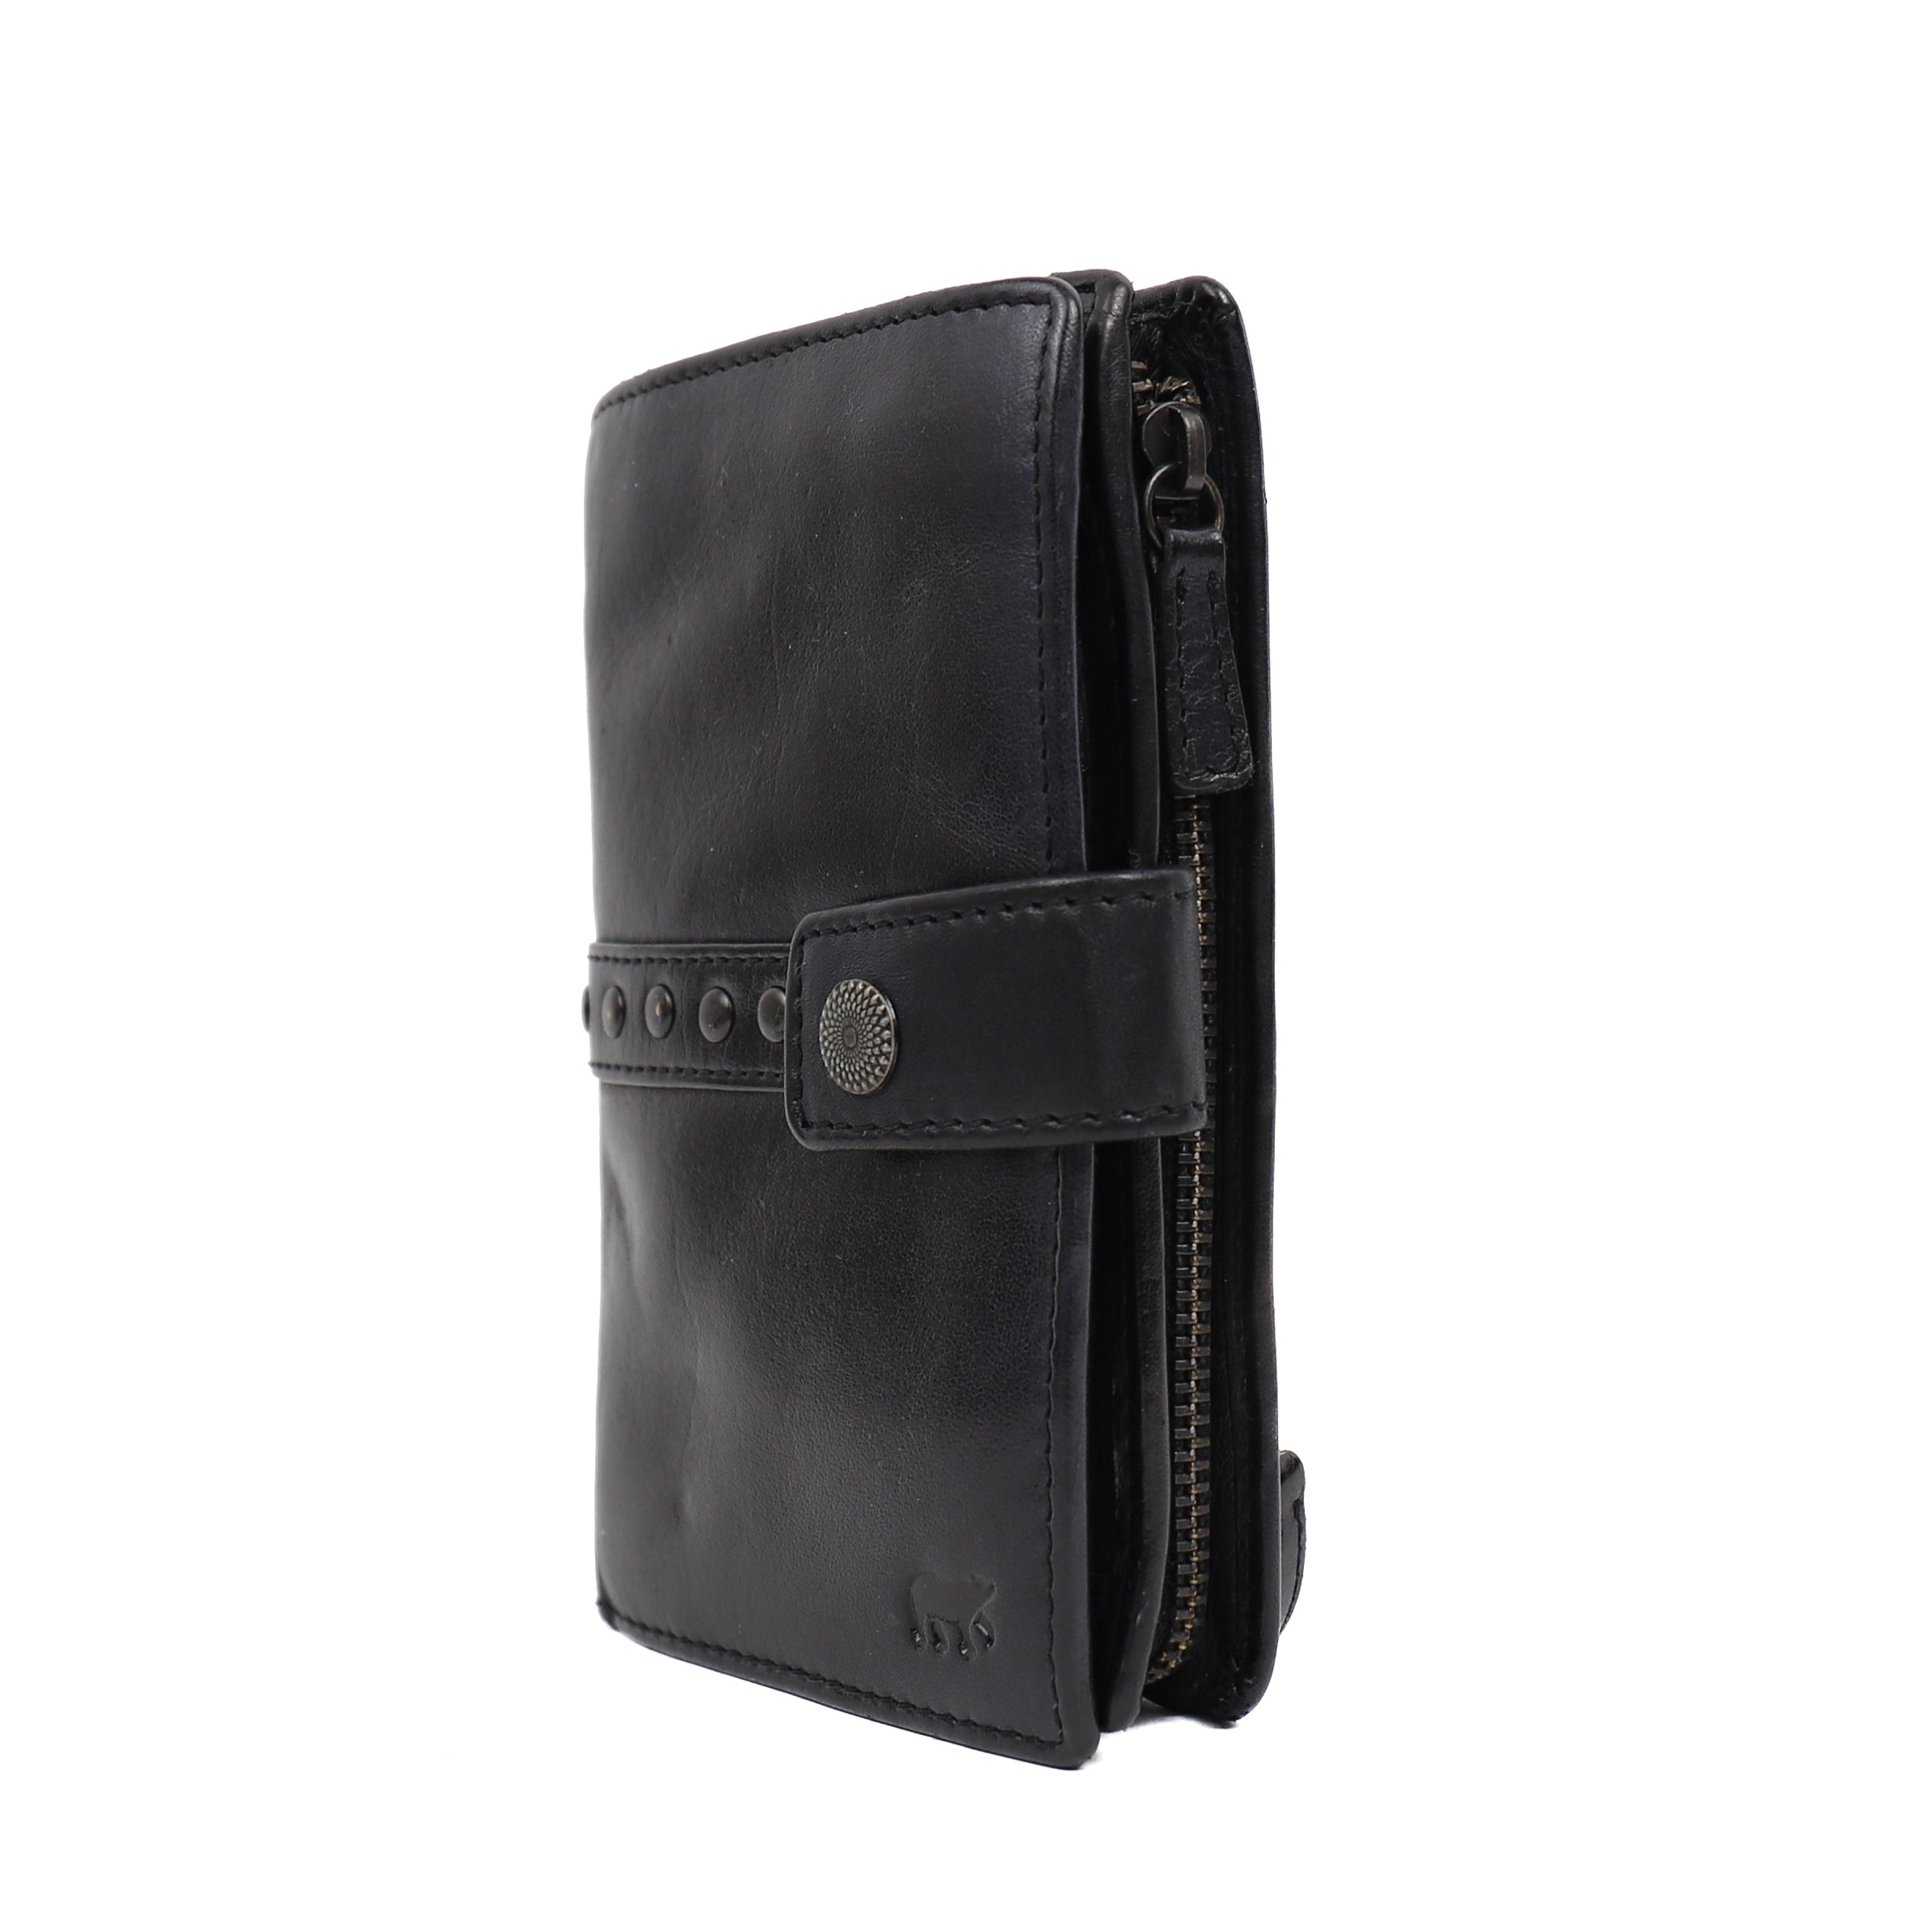 Wallet 'Sanne' black studs - CL 15087